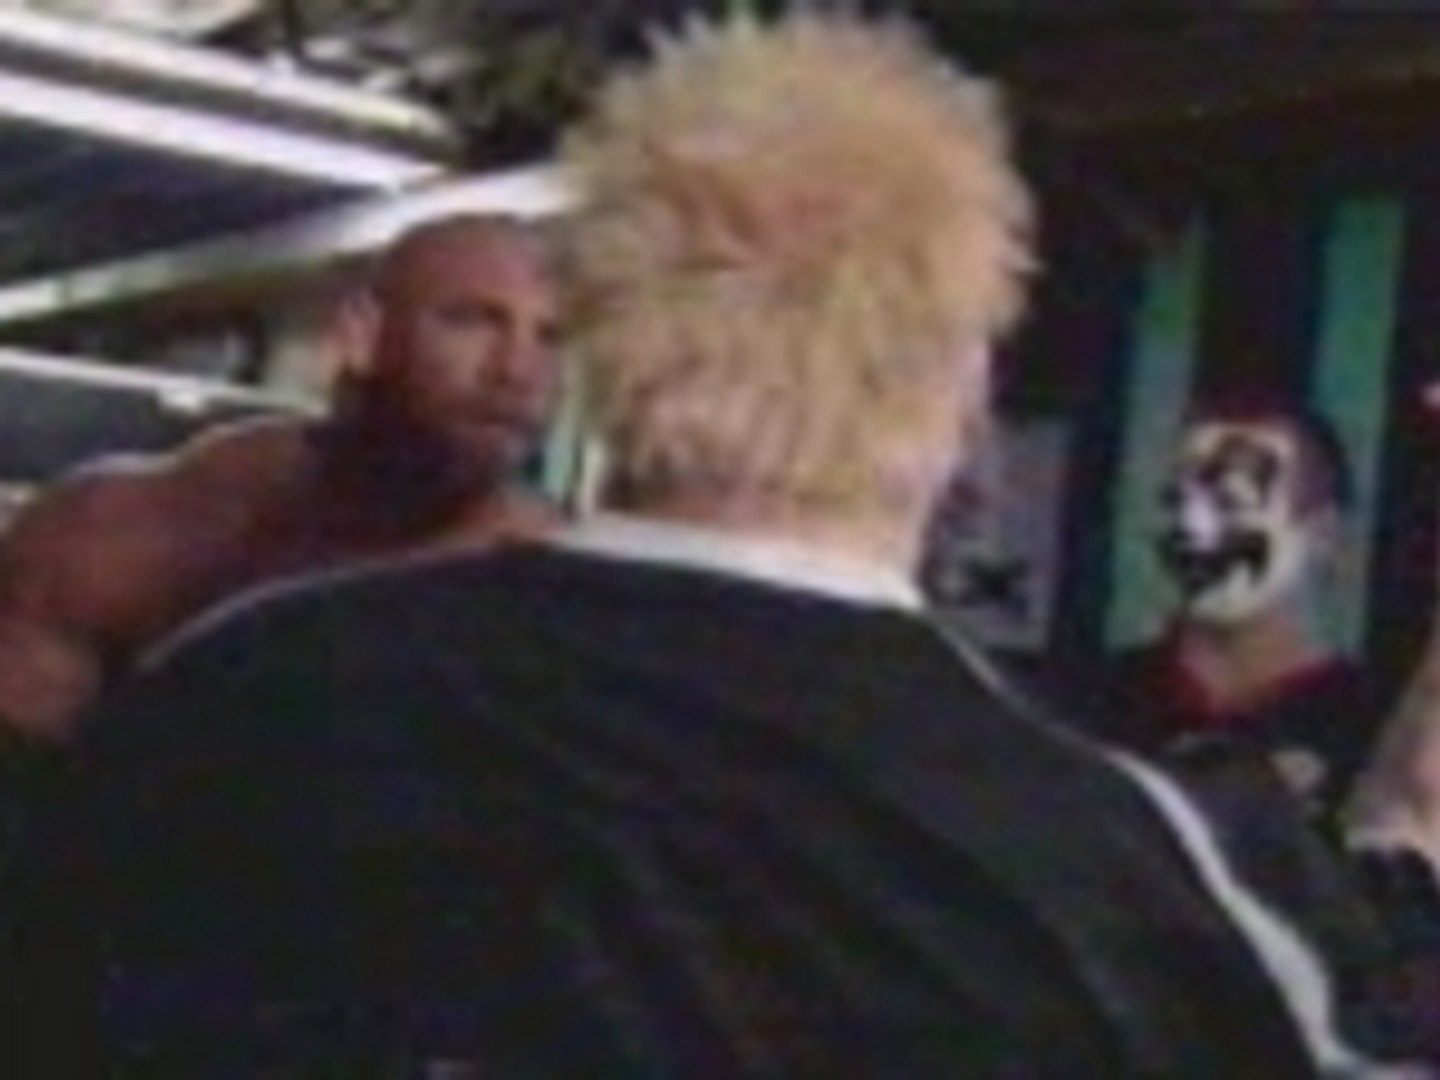 WCW - Bill Goldberg Beats Up Insane Clown Posse Backstage